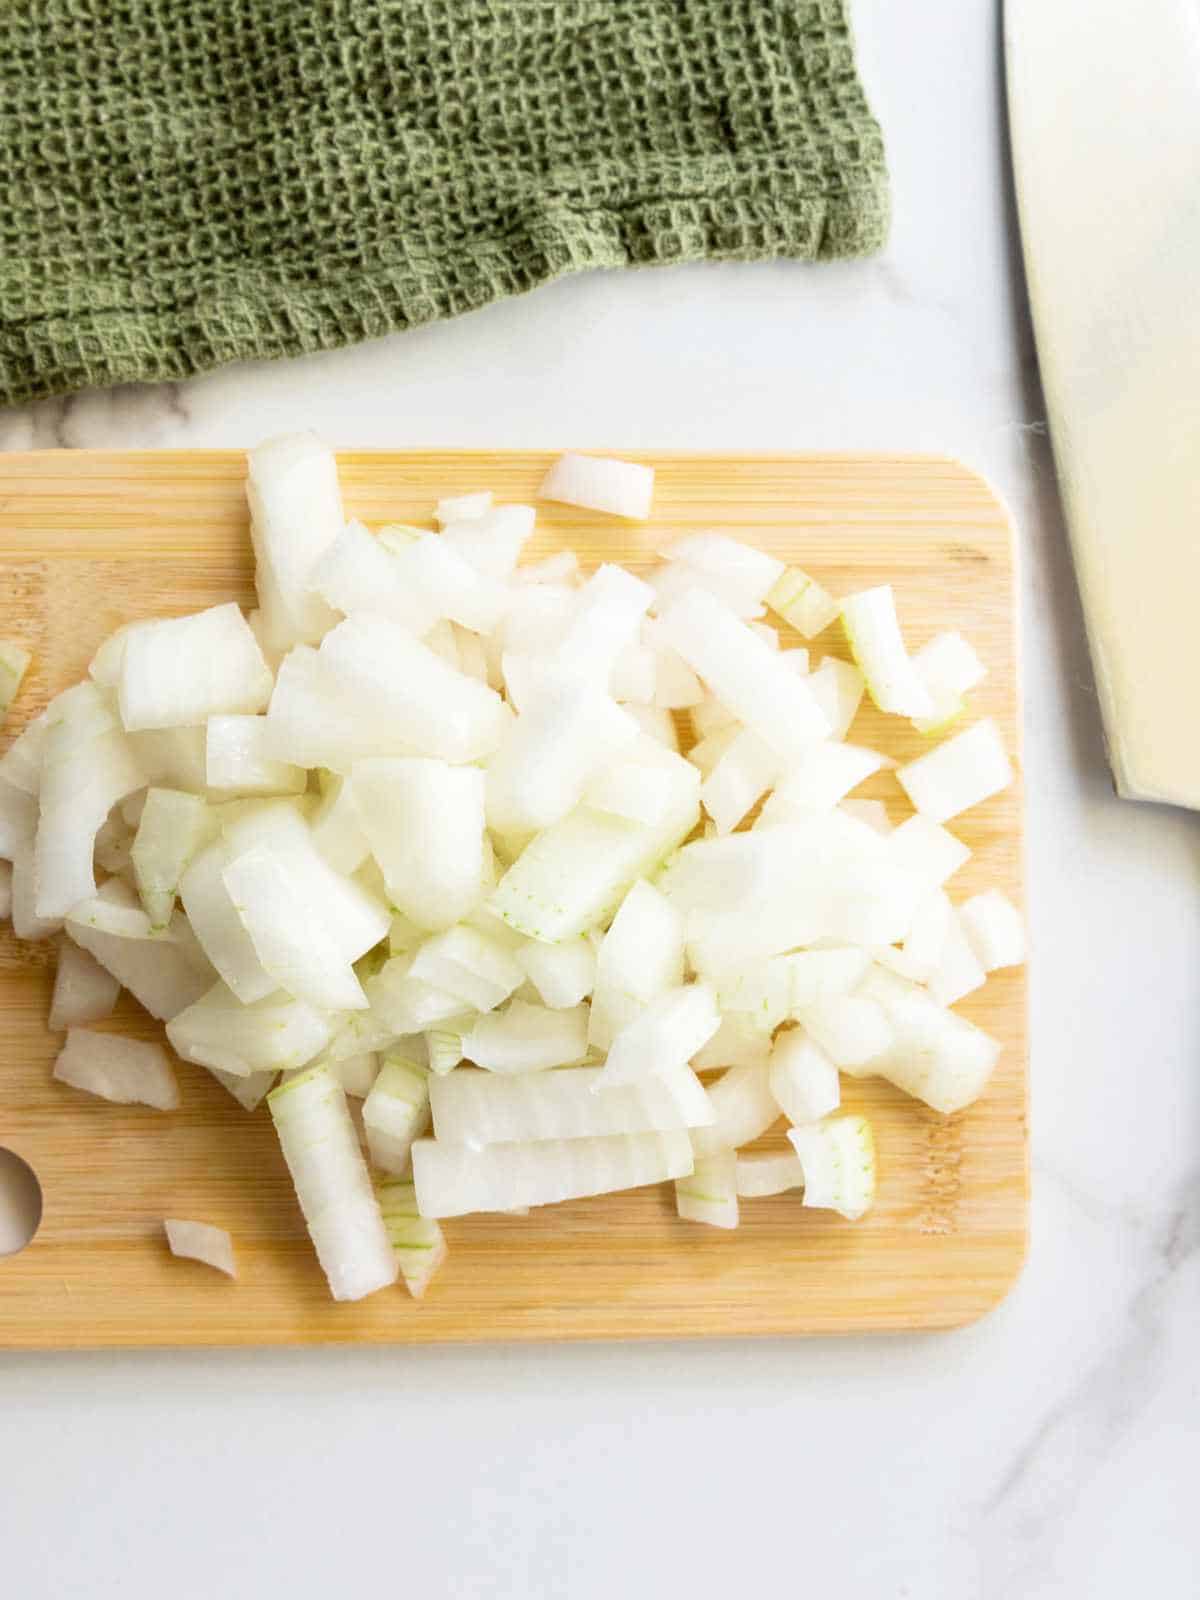 diced onion on a chopping block.